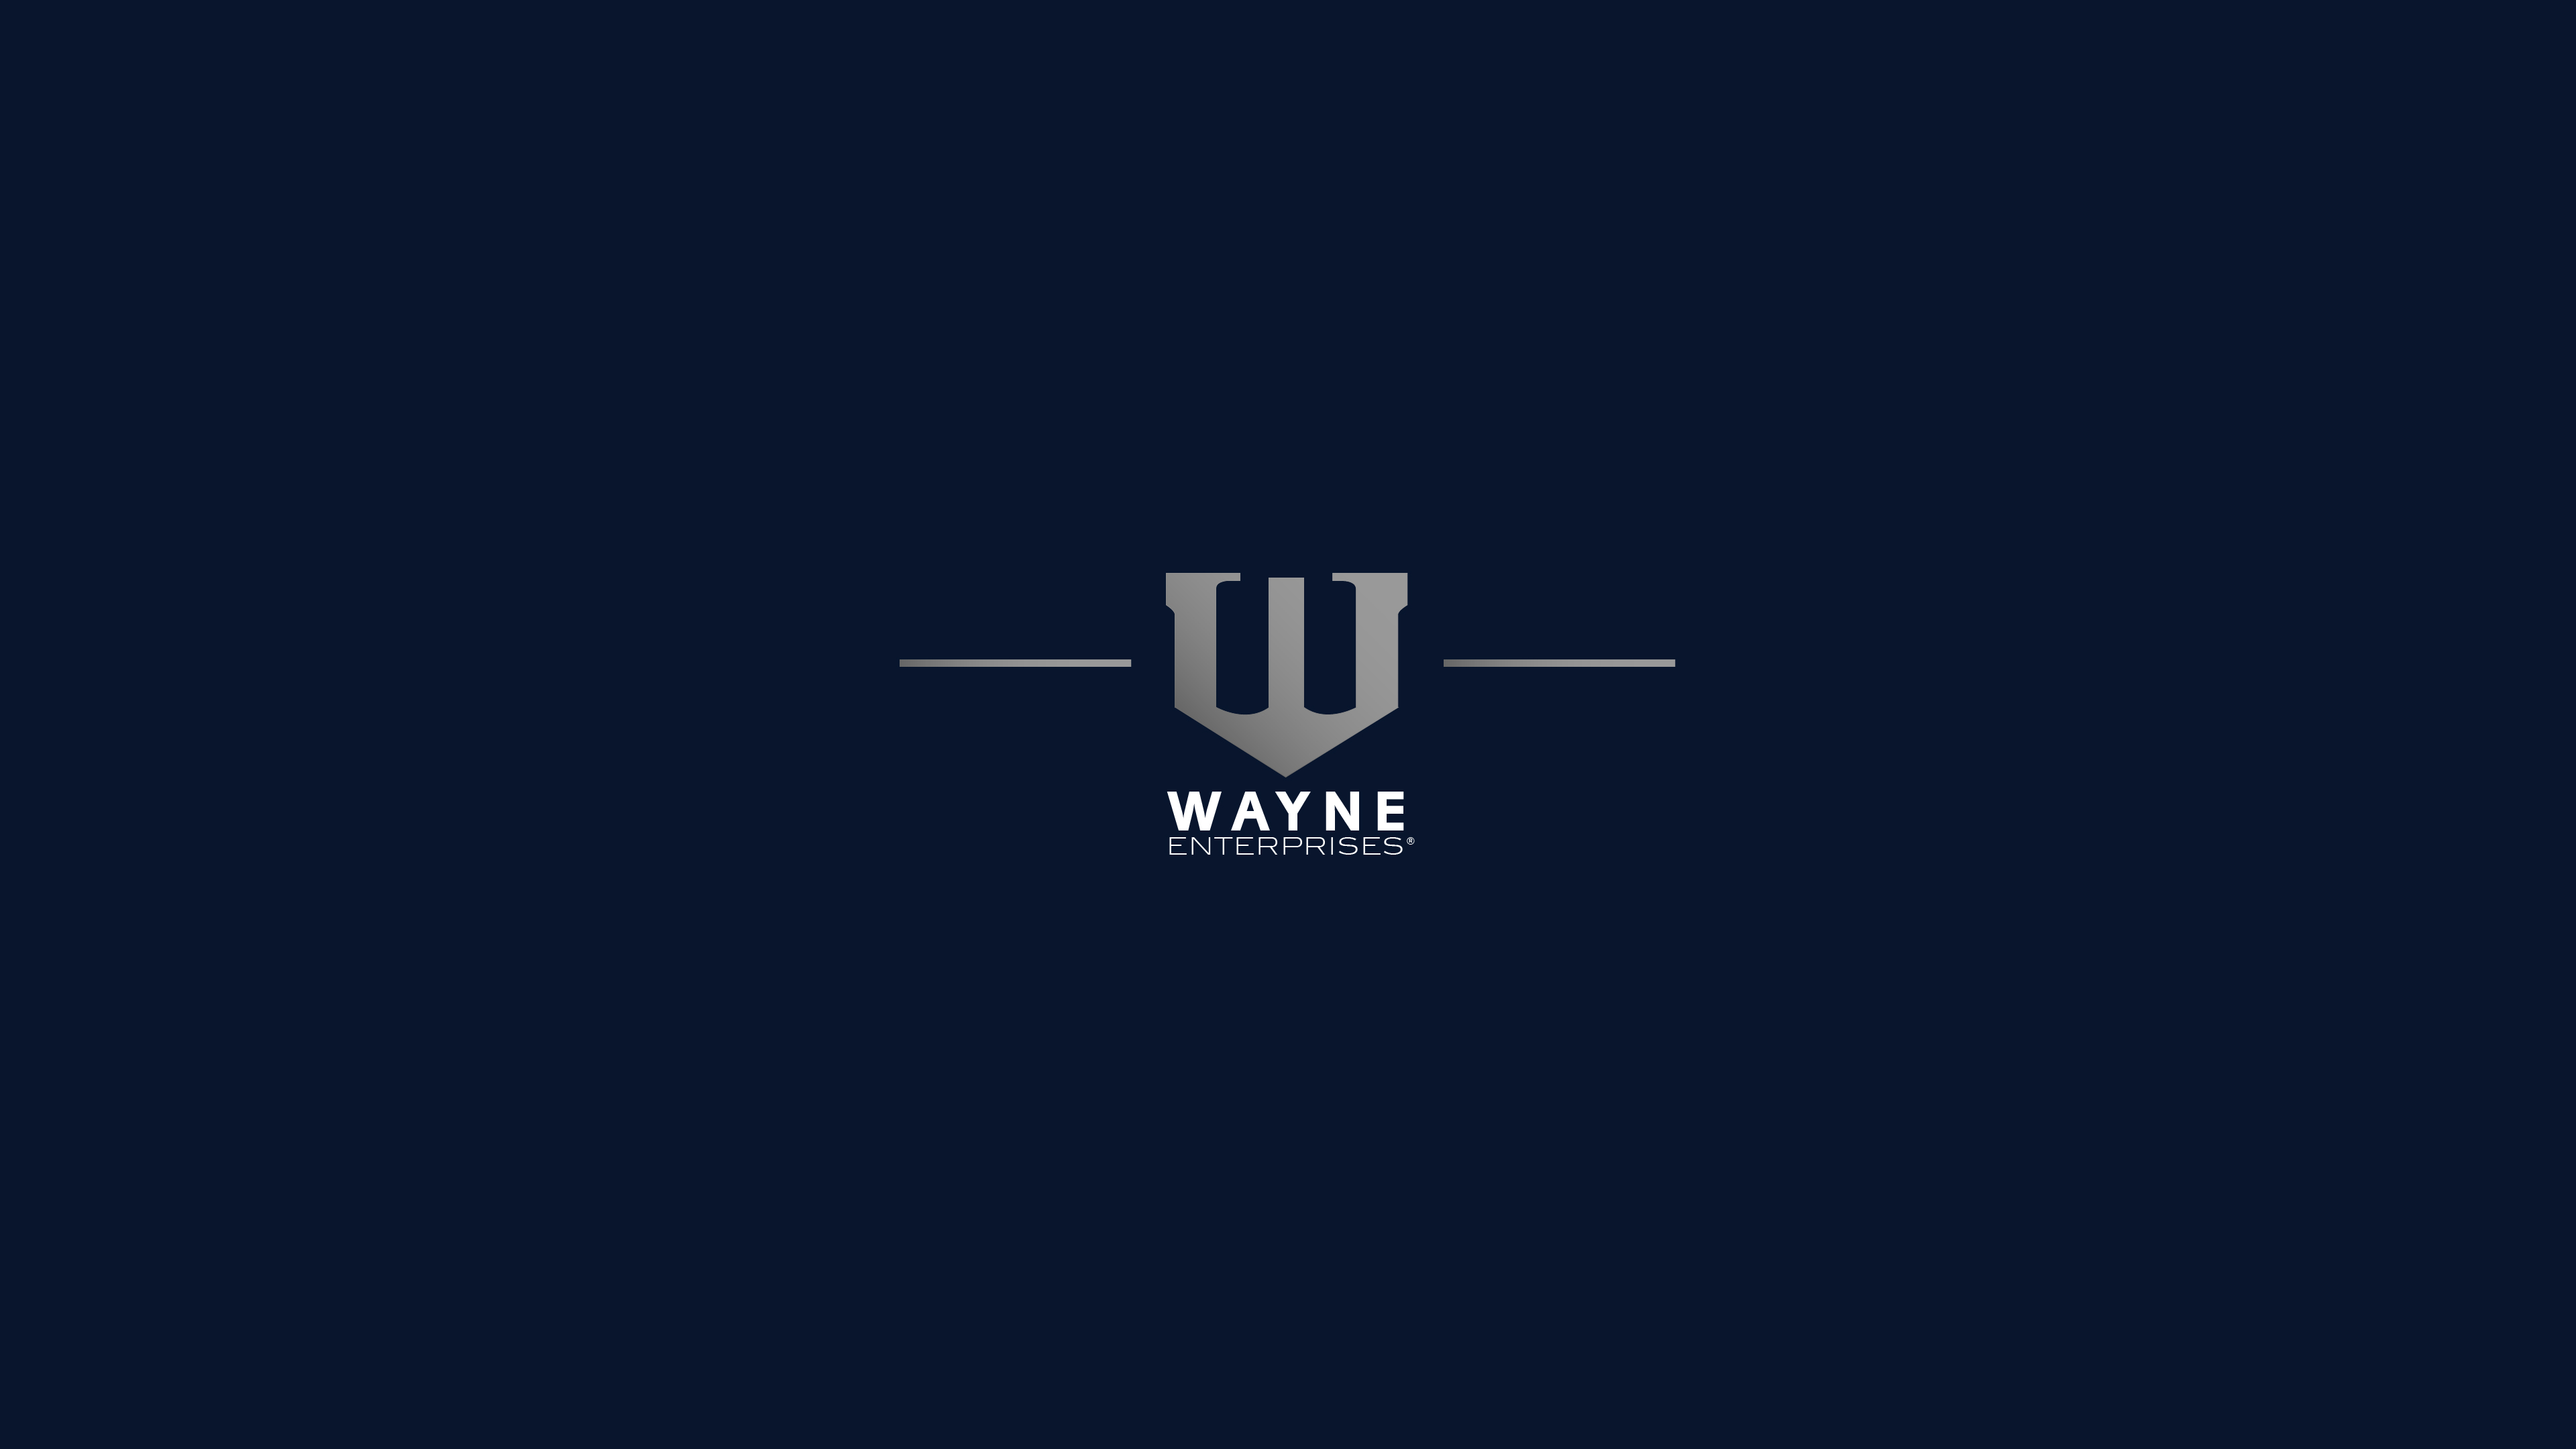 Wayne Enterprises Logo Wallpaper